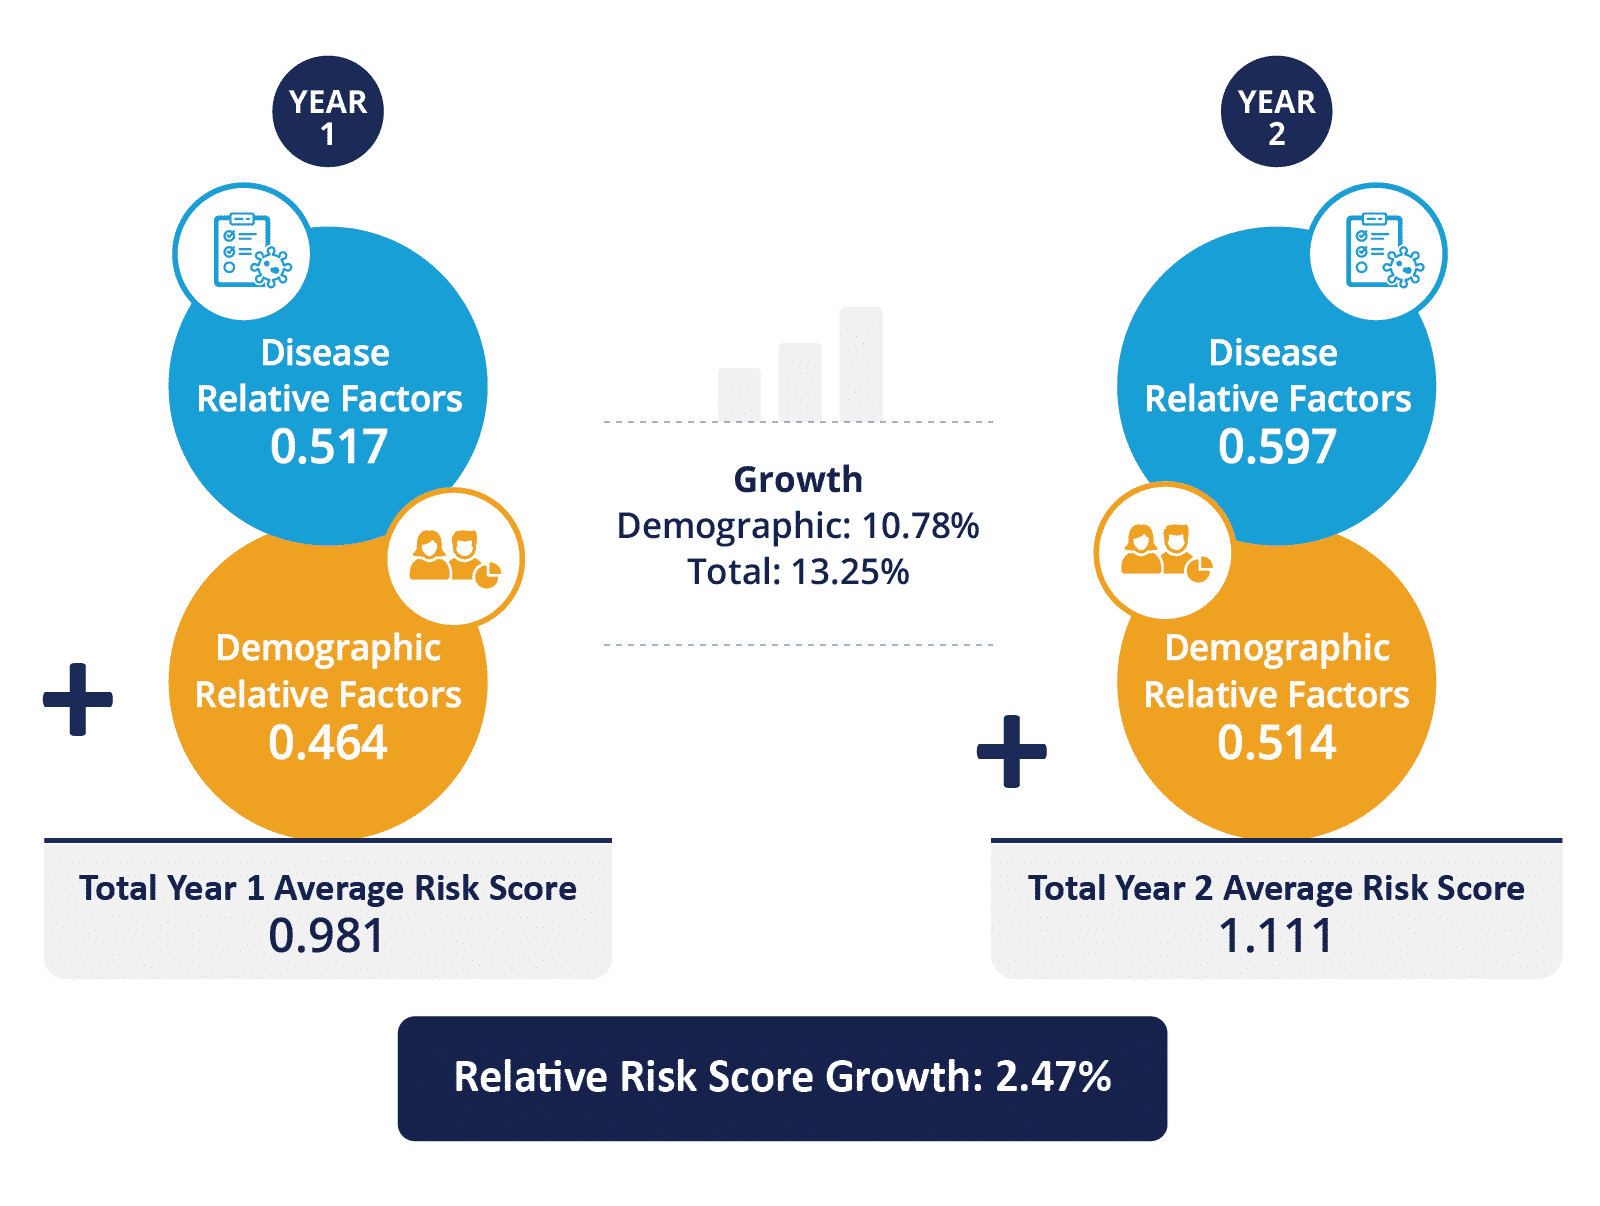 Relative Risk Score Growth